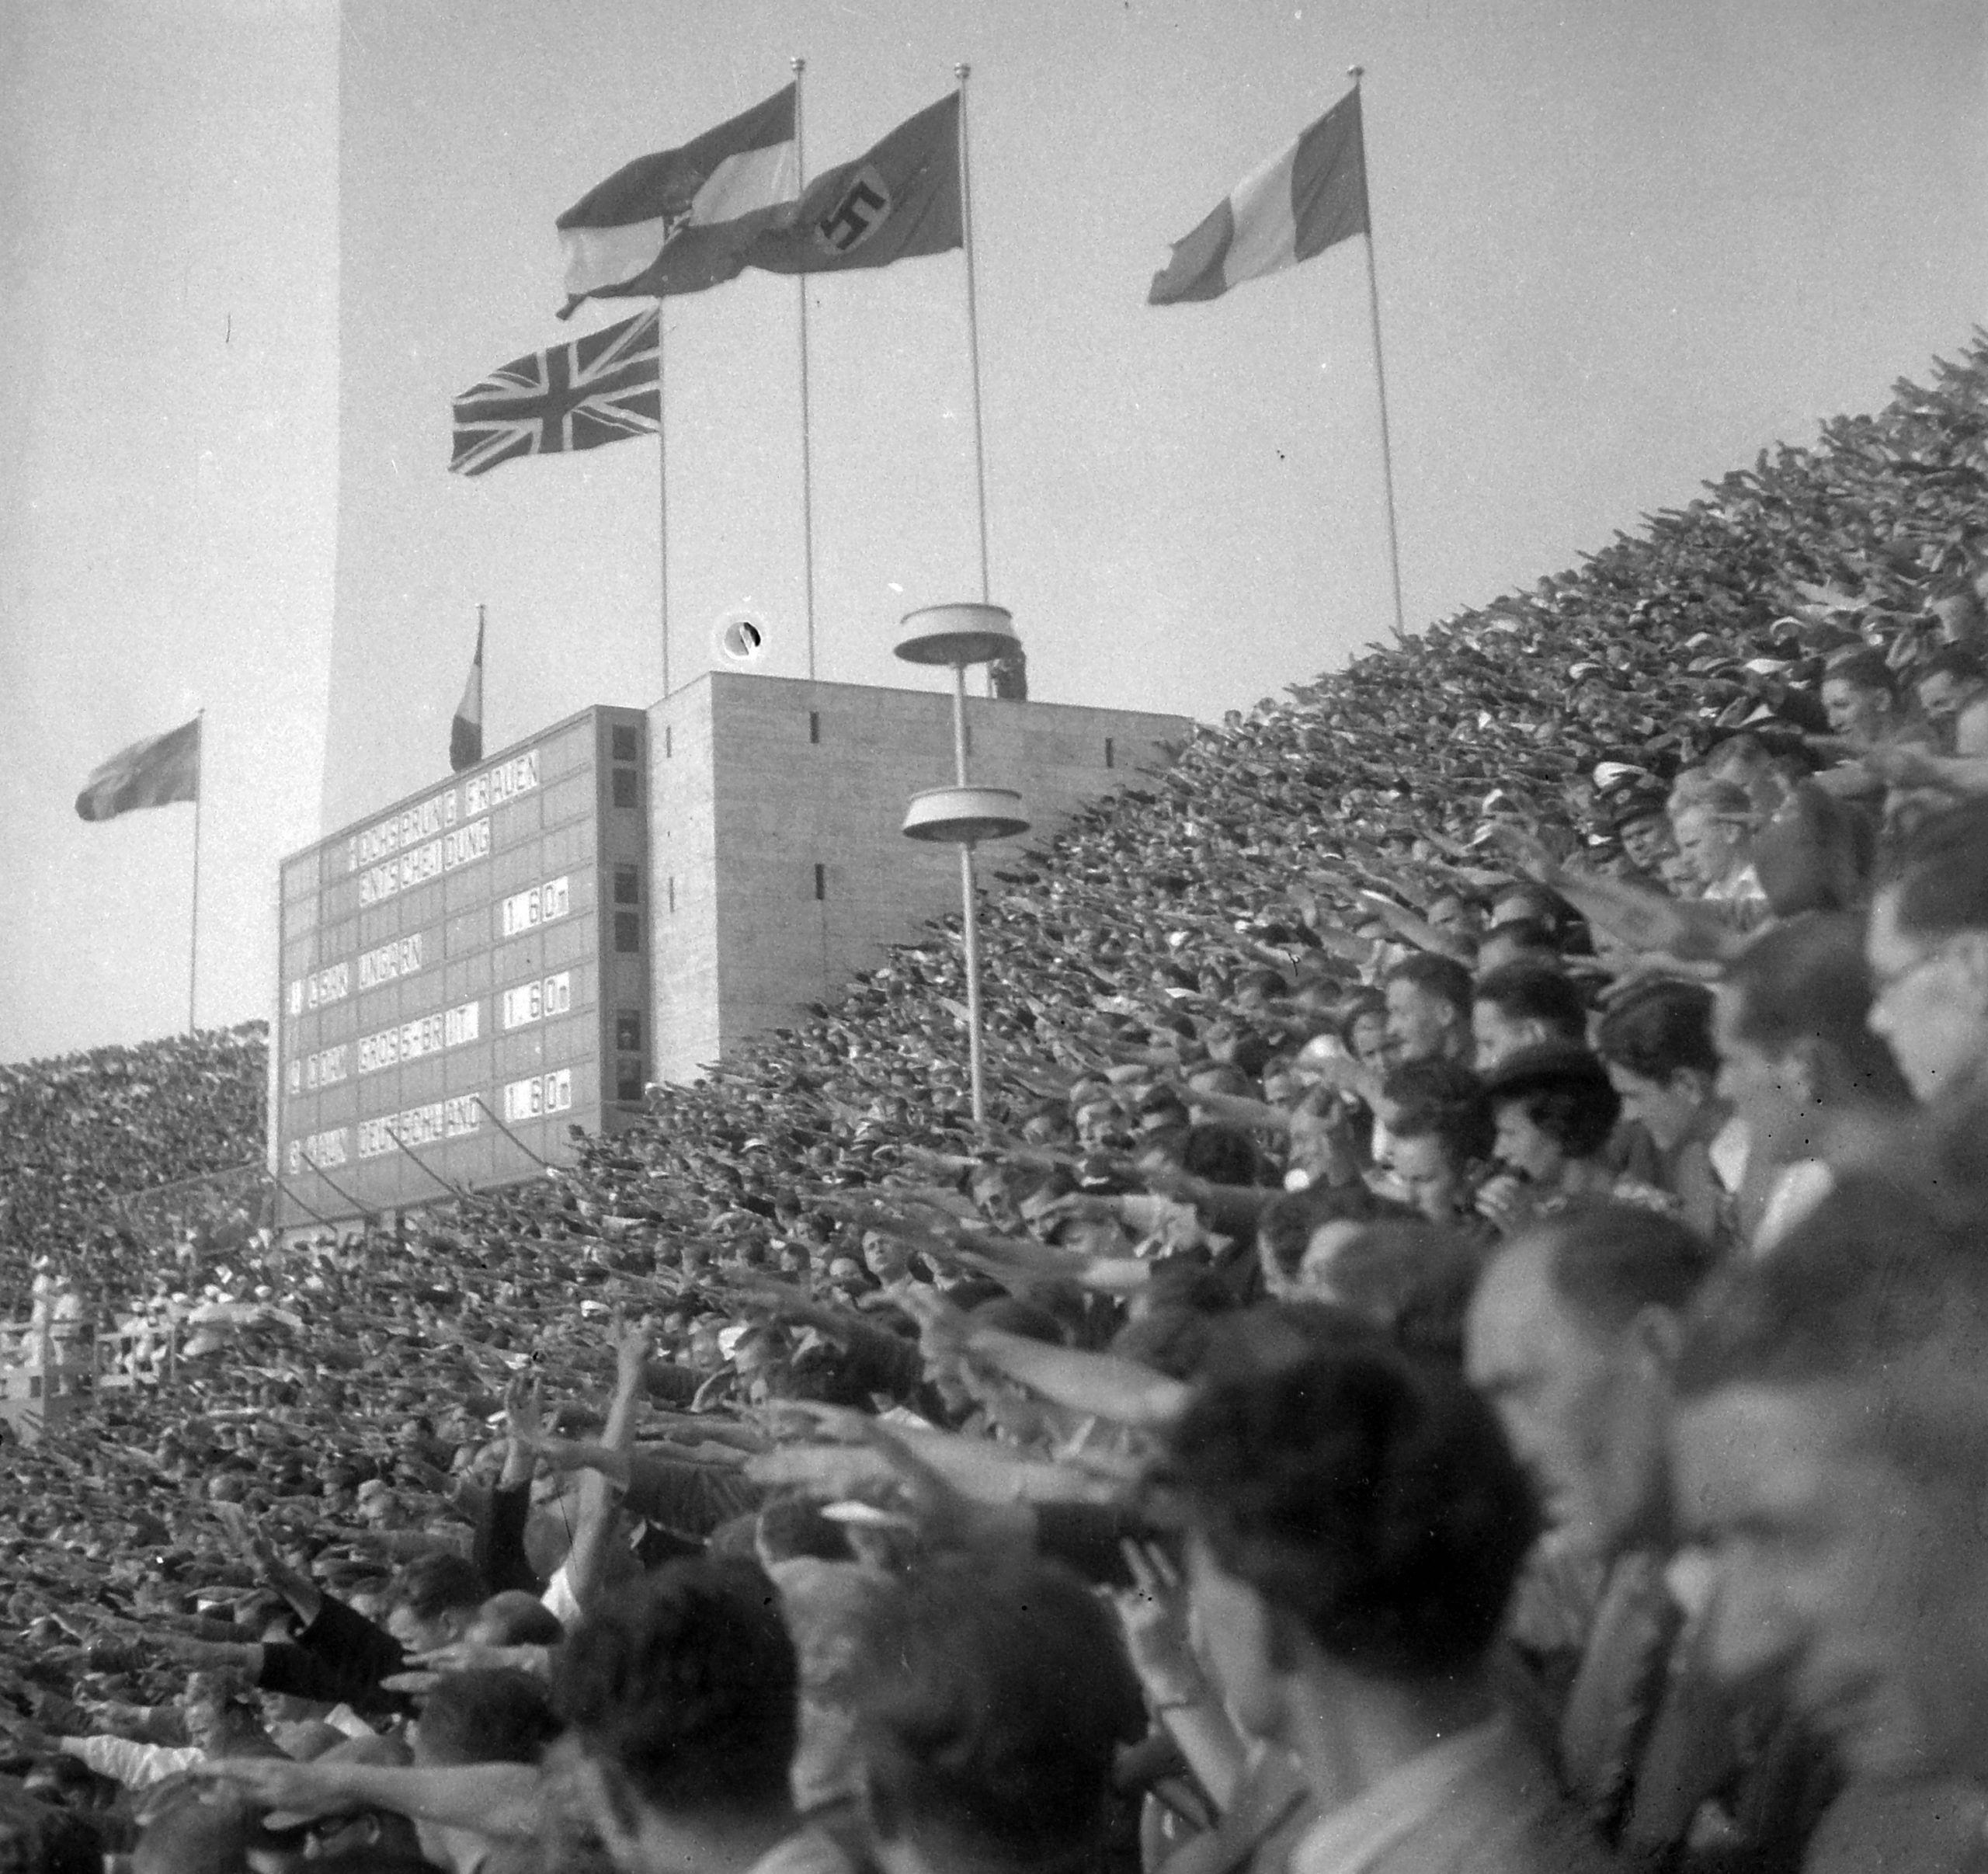 1936 olympics